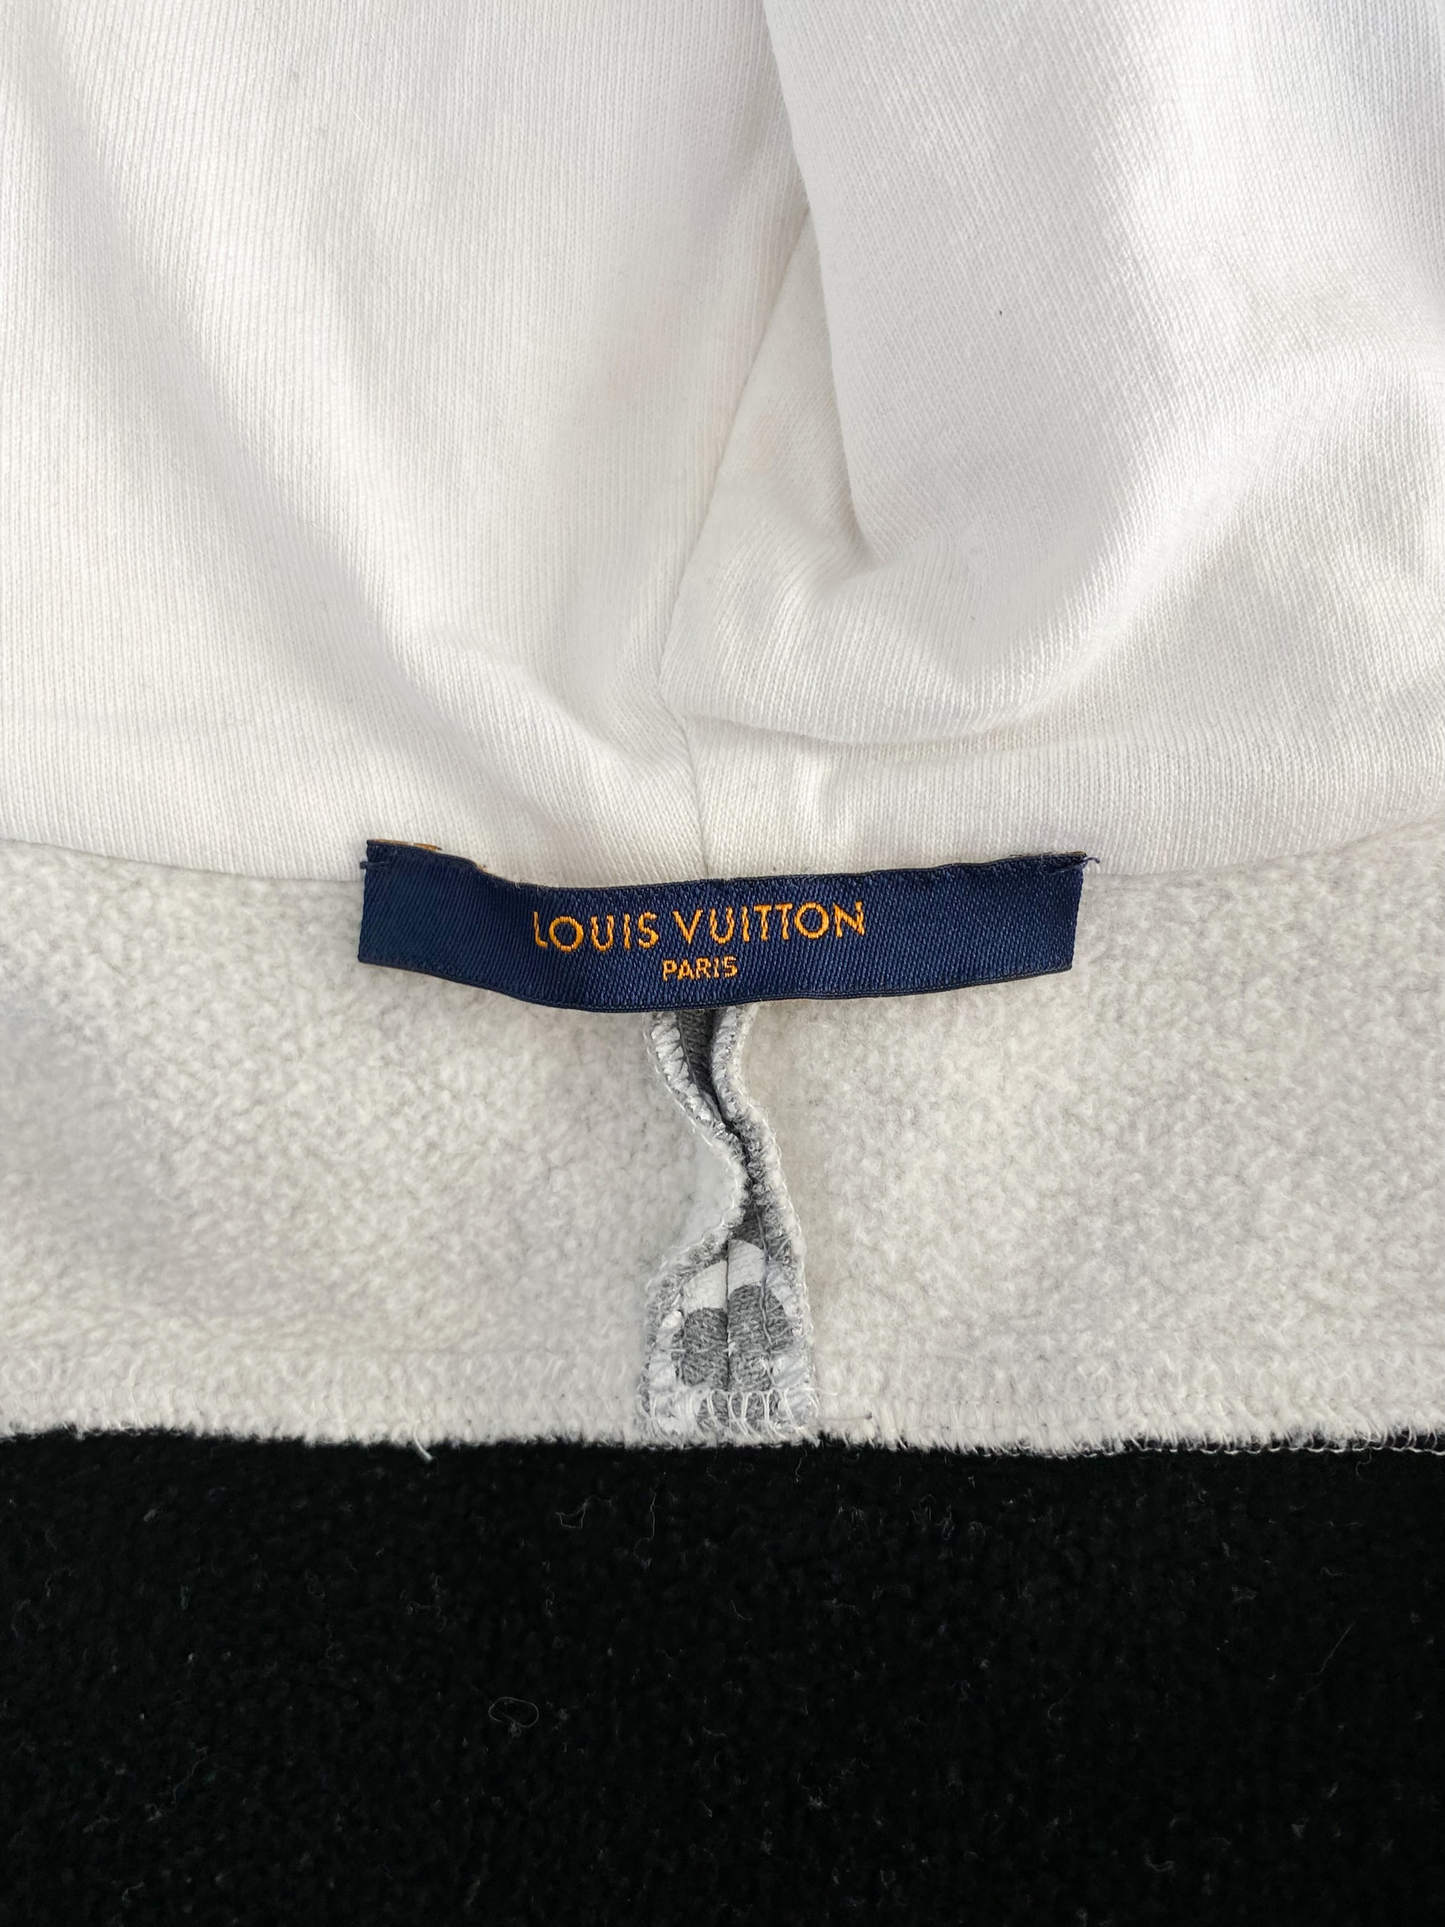 The Luxury Shopper - New season Louis Vuitton Circle Cut hoodie 😍  @suungjuuun 📸 . . . #lv #louisvuitton #lvcirclecuthoodie #lvhoodie #lvss20  #louisvuittonhoodie #monogram #luxury #luxuryfashion #personalshopping  #personalshopper